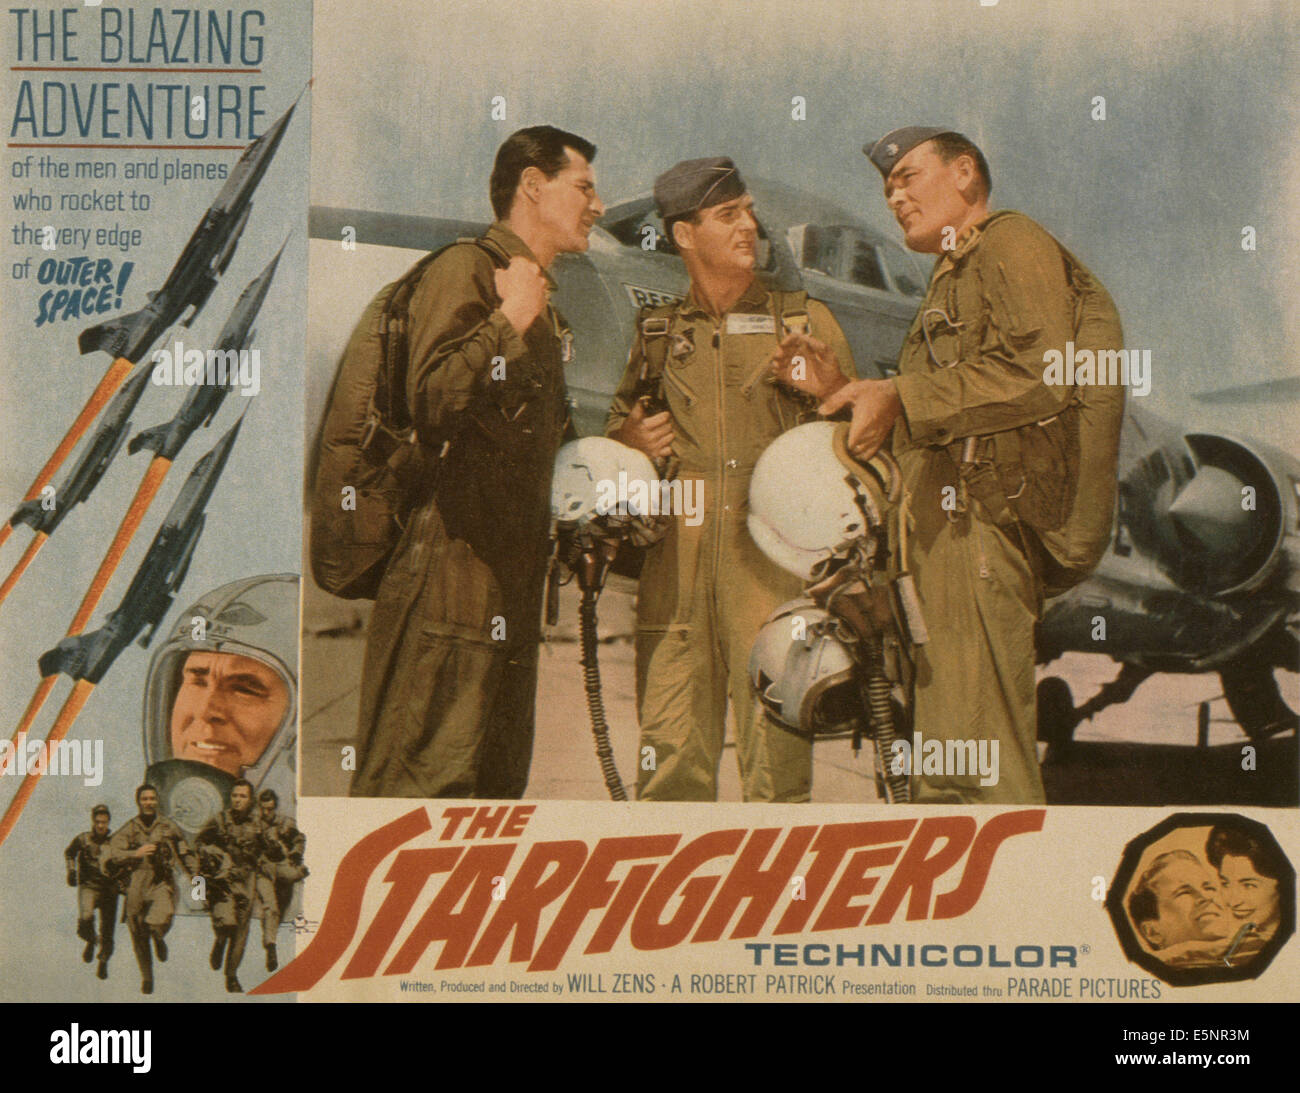 the-starfighters-us-lobbycard-robert-dornan-center-1964-E5NR3M.jpg